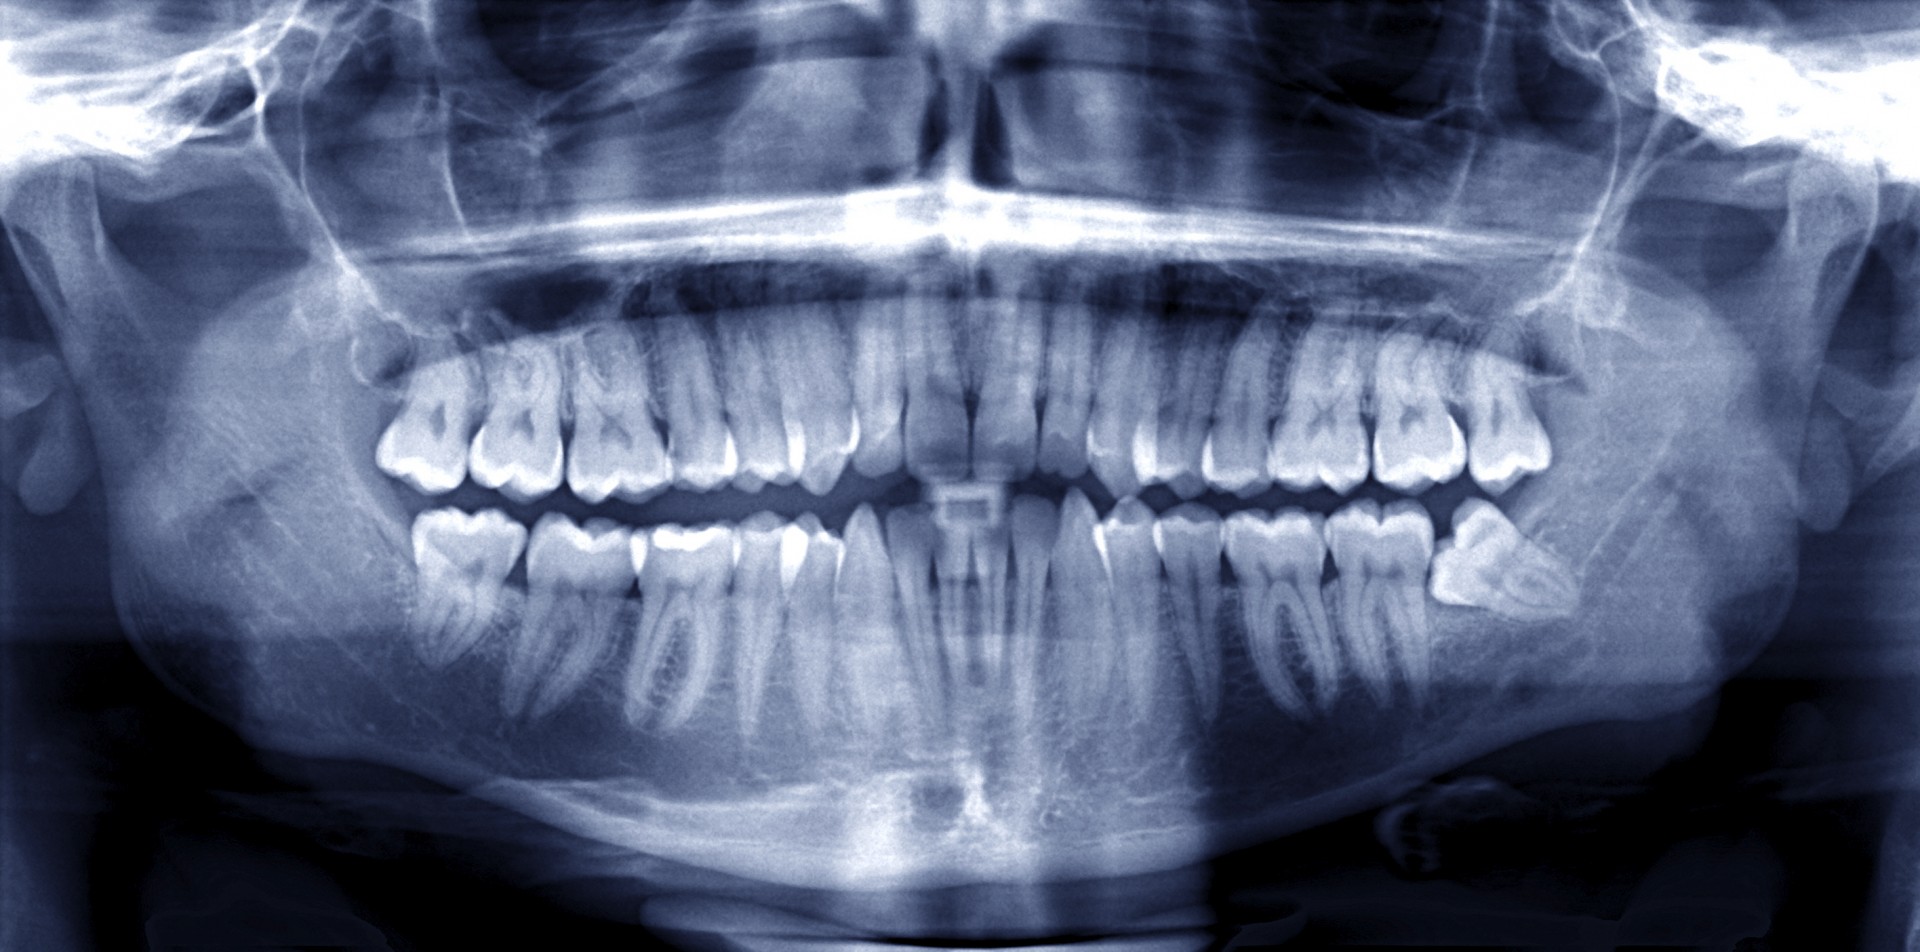 Retain or extract wisdom teeth?